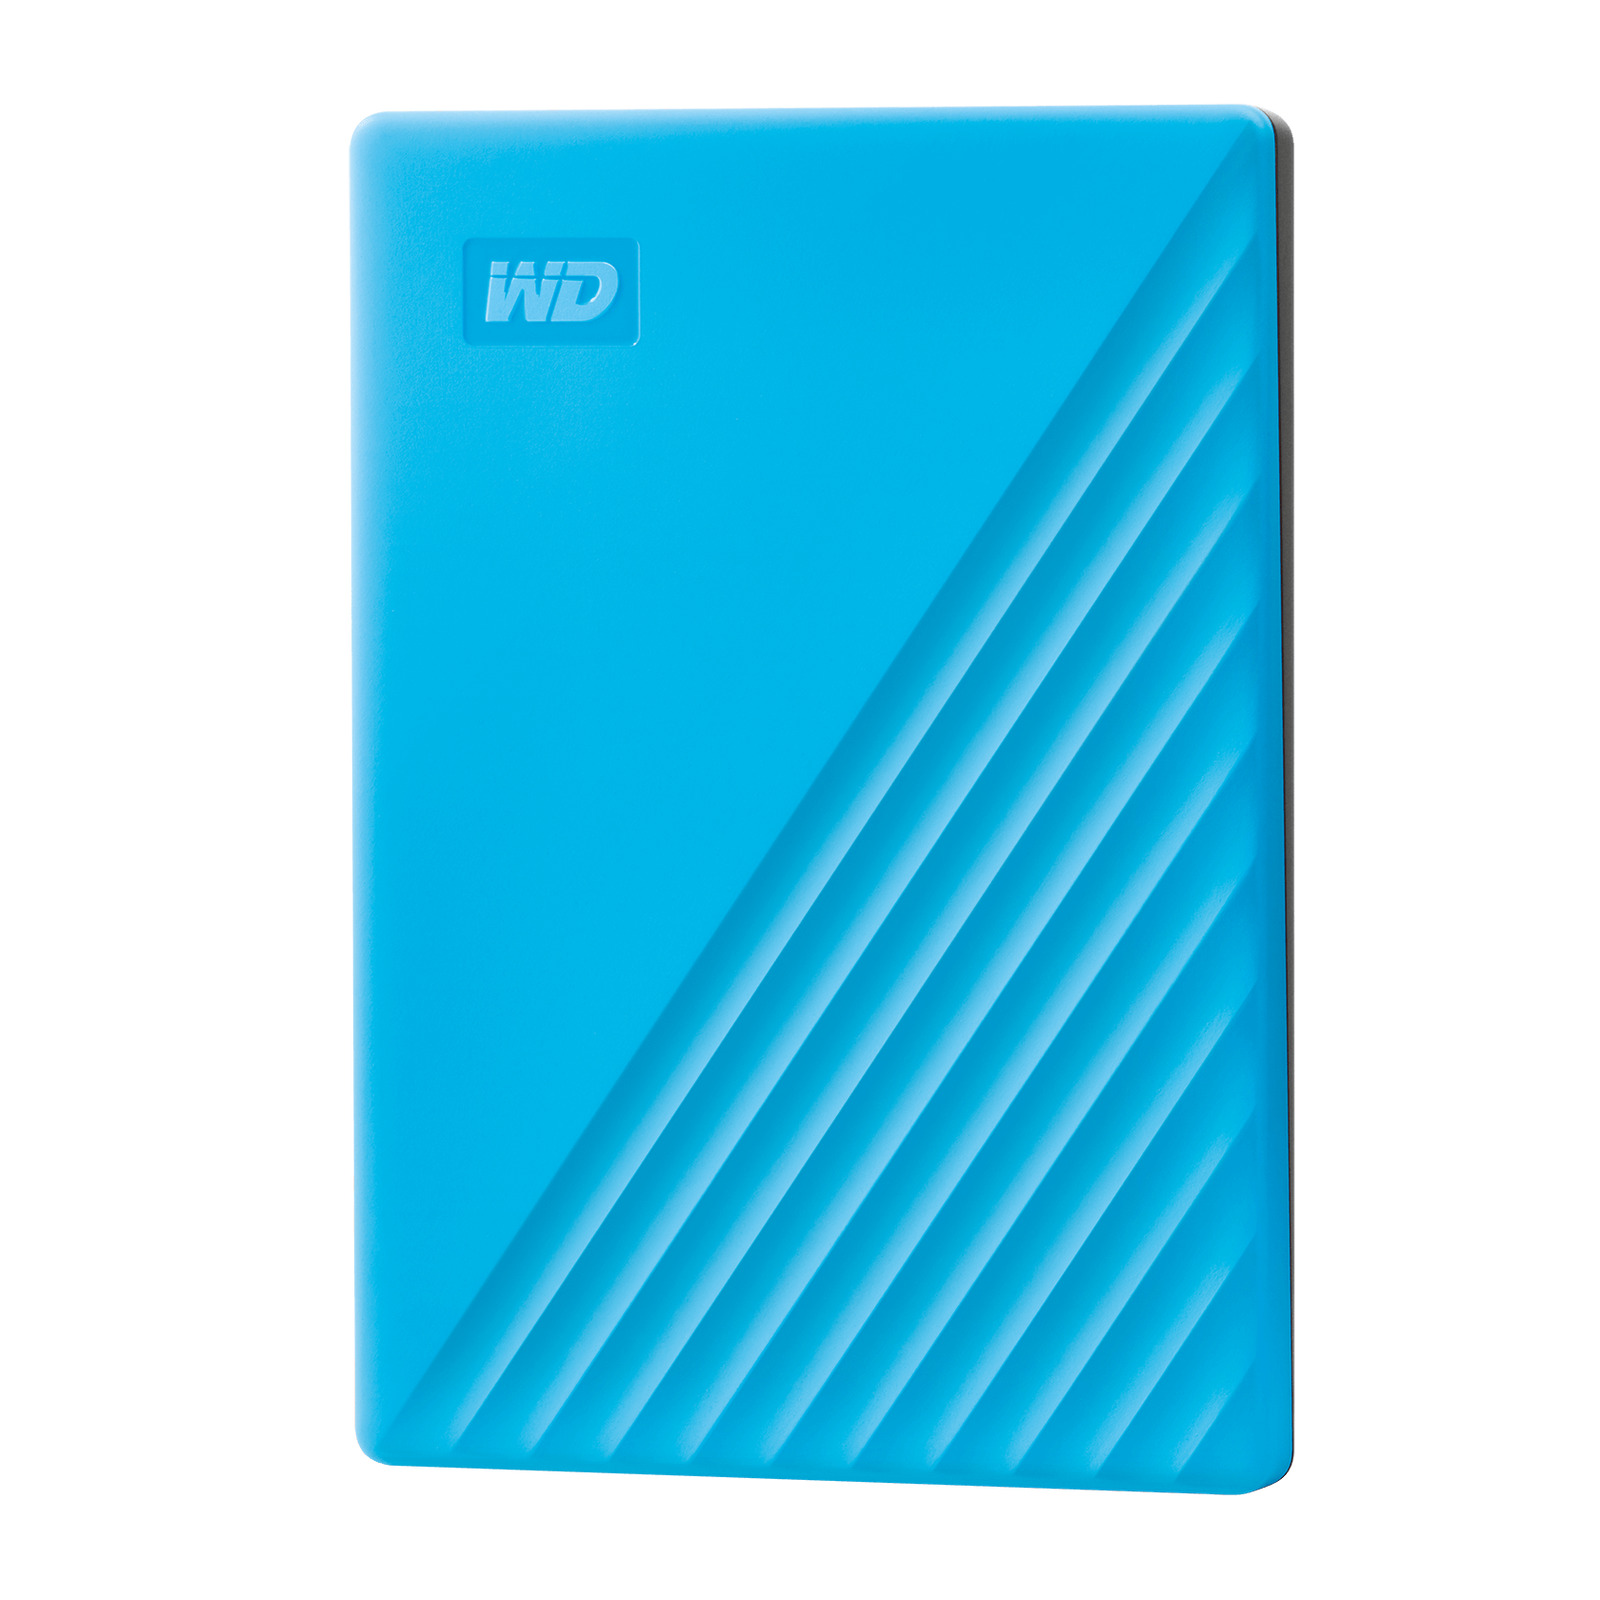 WD 2TB My Passport, Portable External Hard Drive, Blue - WDBYVG0020BBL-WESN